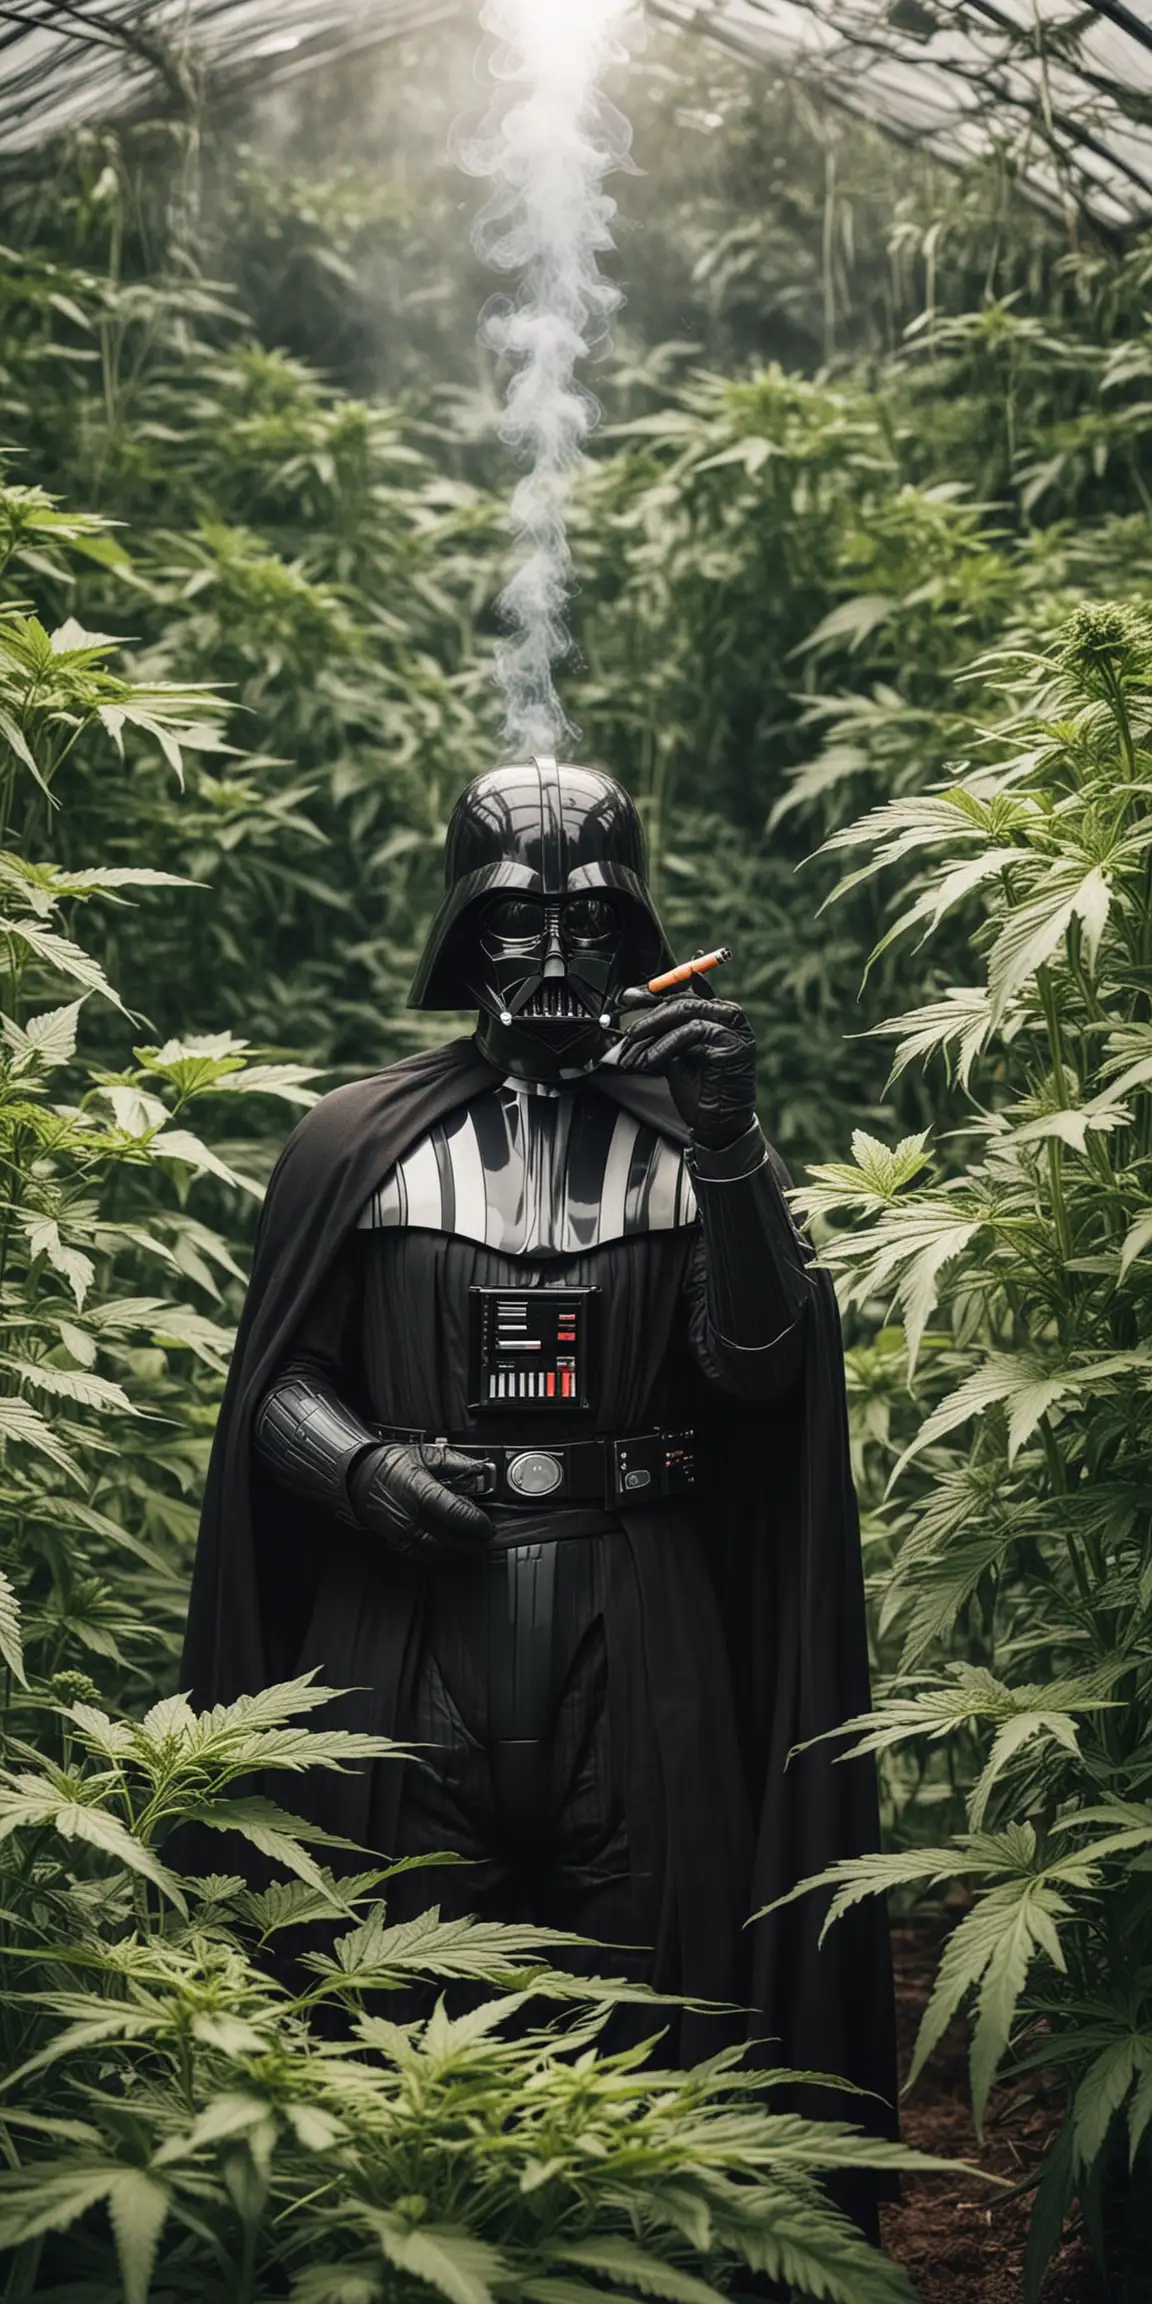 Darth Vader Smoking in a Cannabis Grow Room